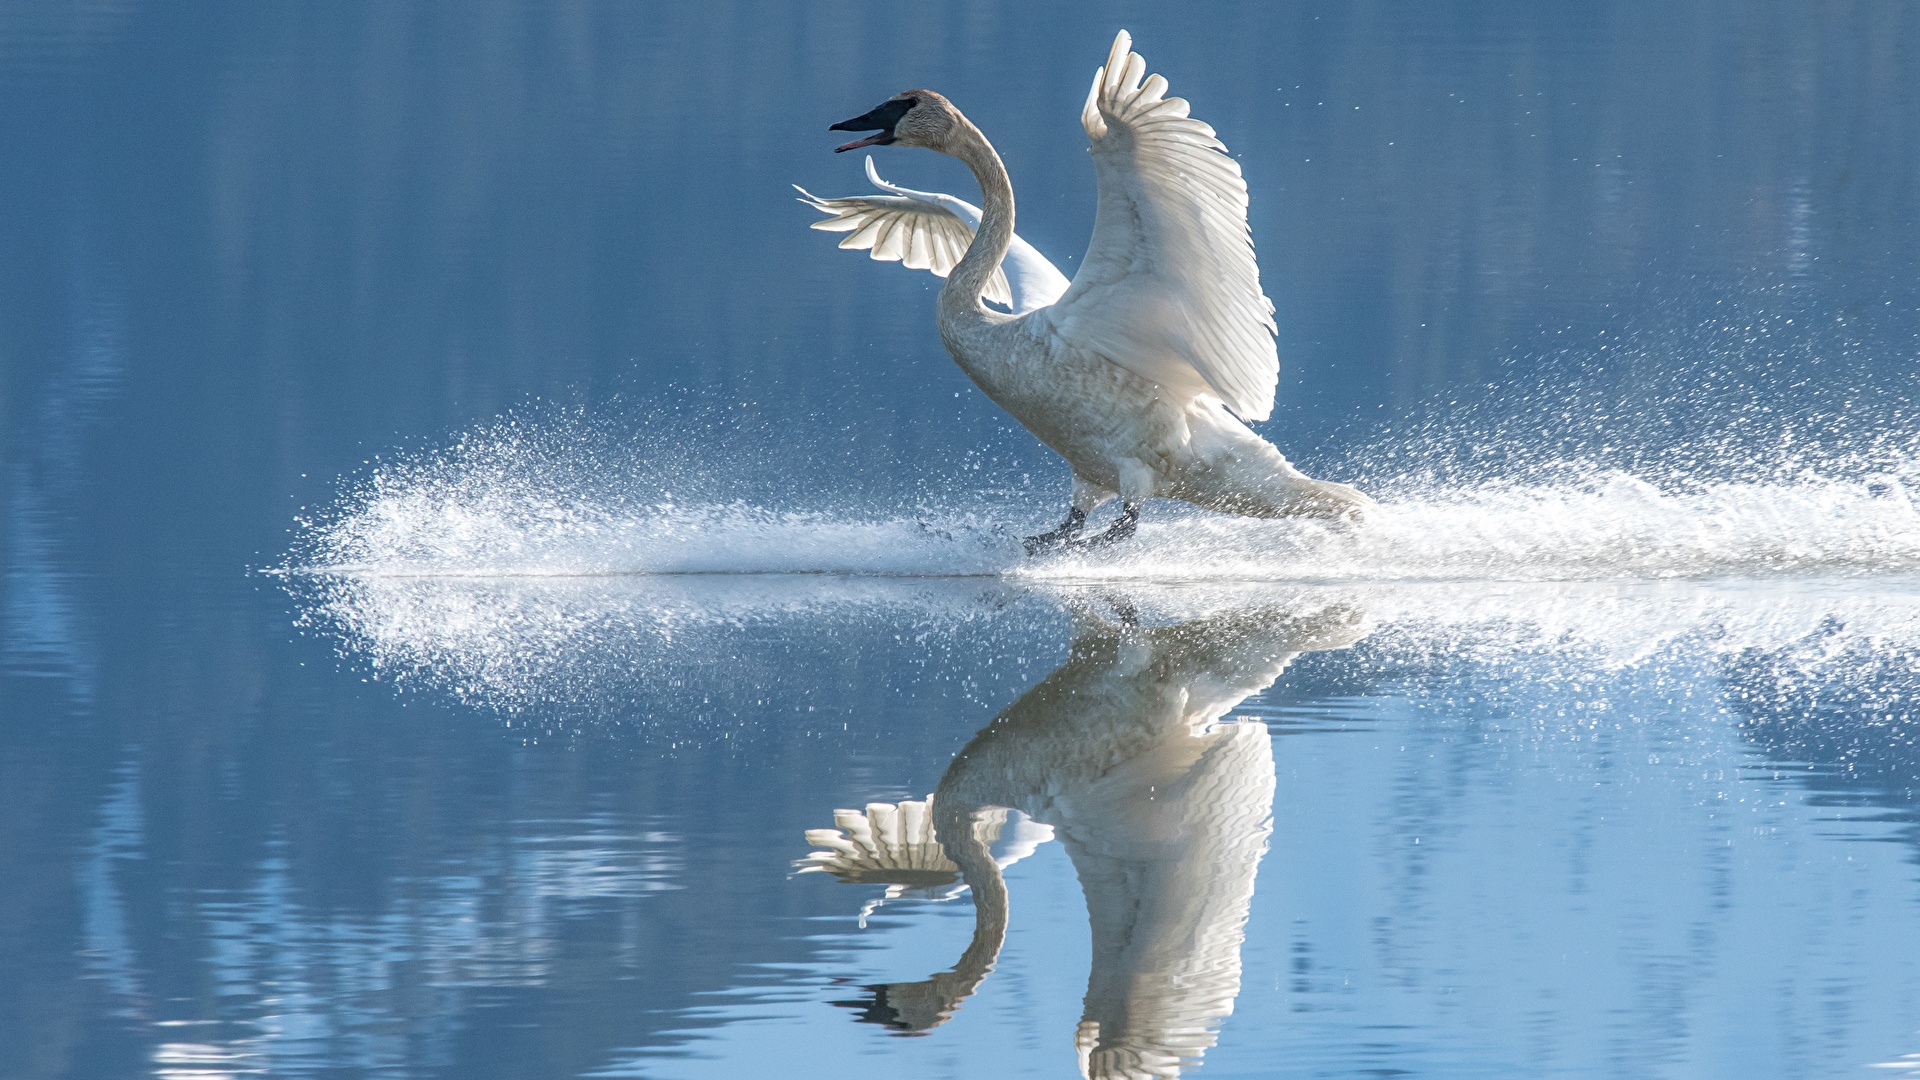 photos du net - Page 20 Water_Birds_Swans_Reflection_Wings_Water_splash_575786_1920x1080